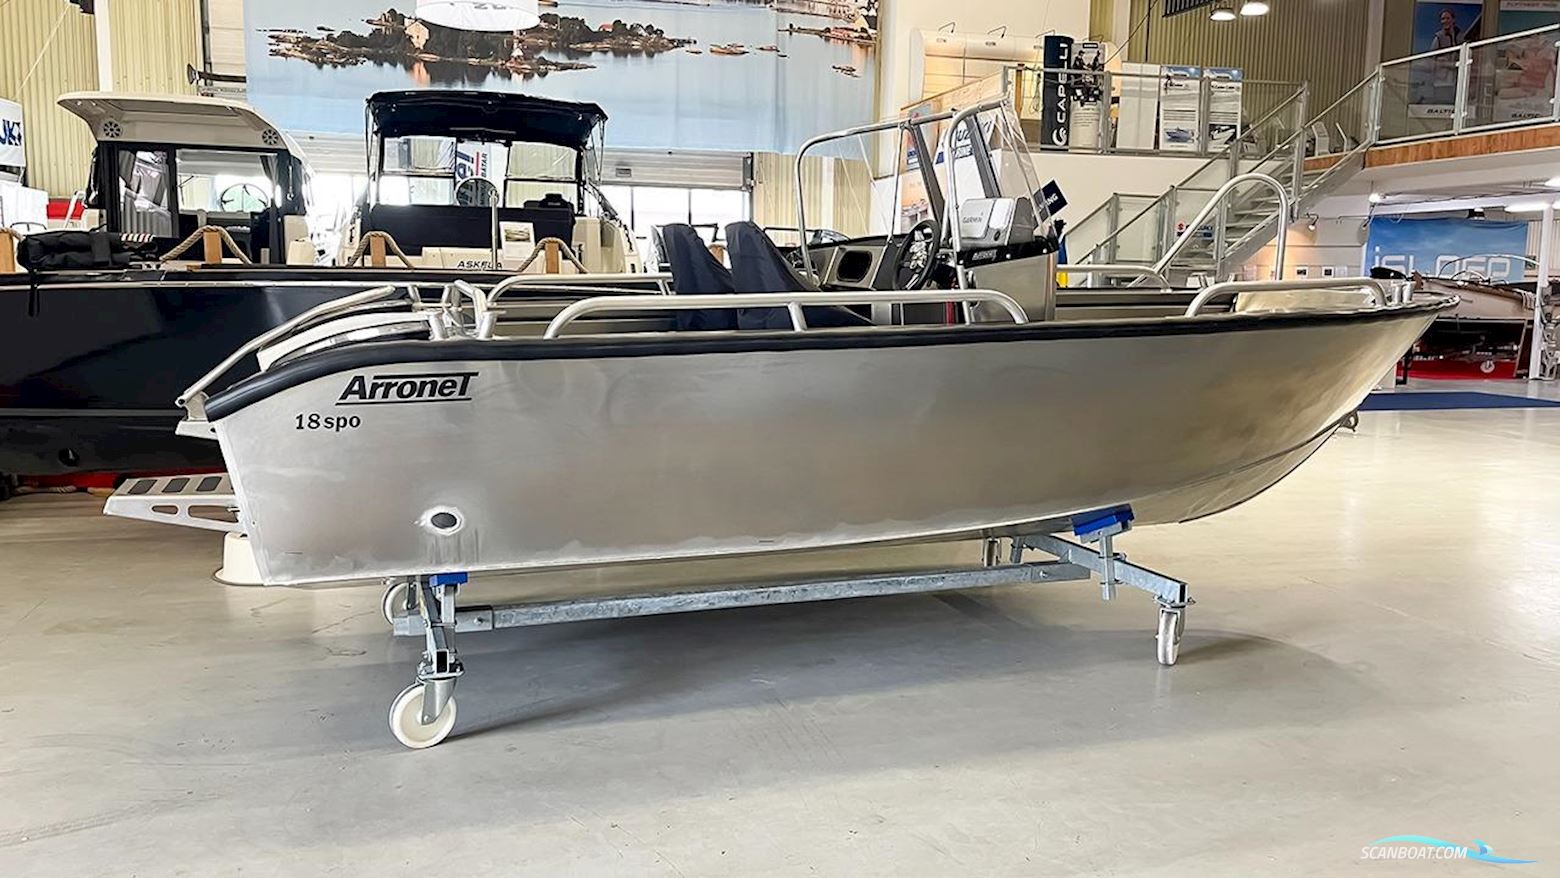 ARRONET 18 SPO Motor boat 2023, with Suzuki engine, Sweden